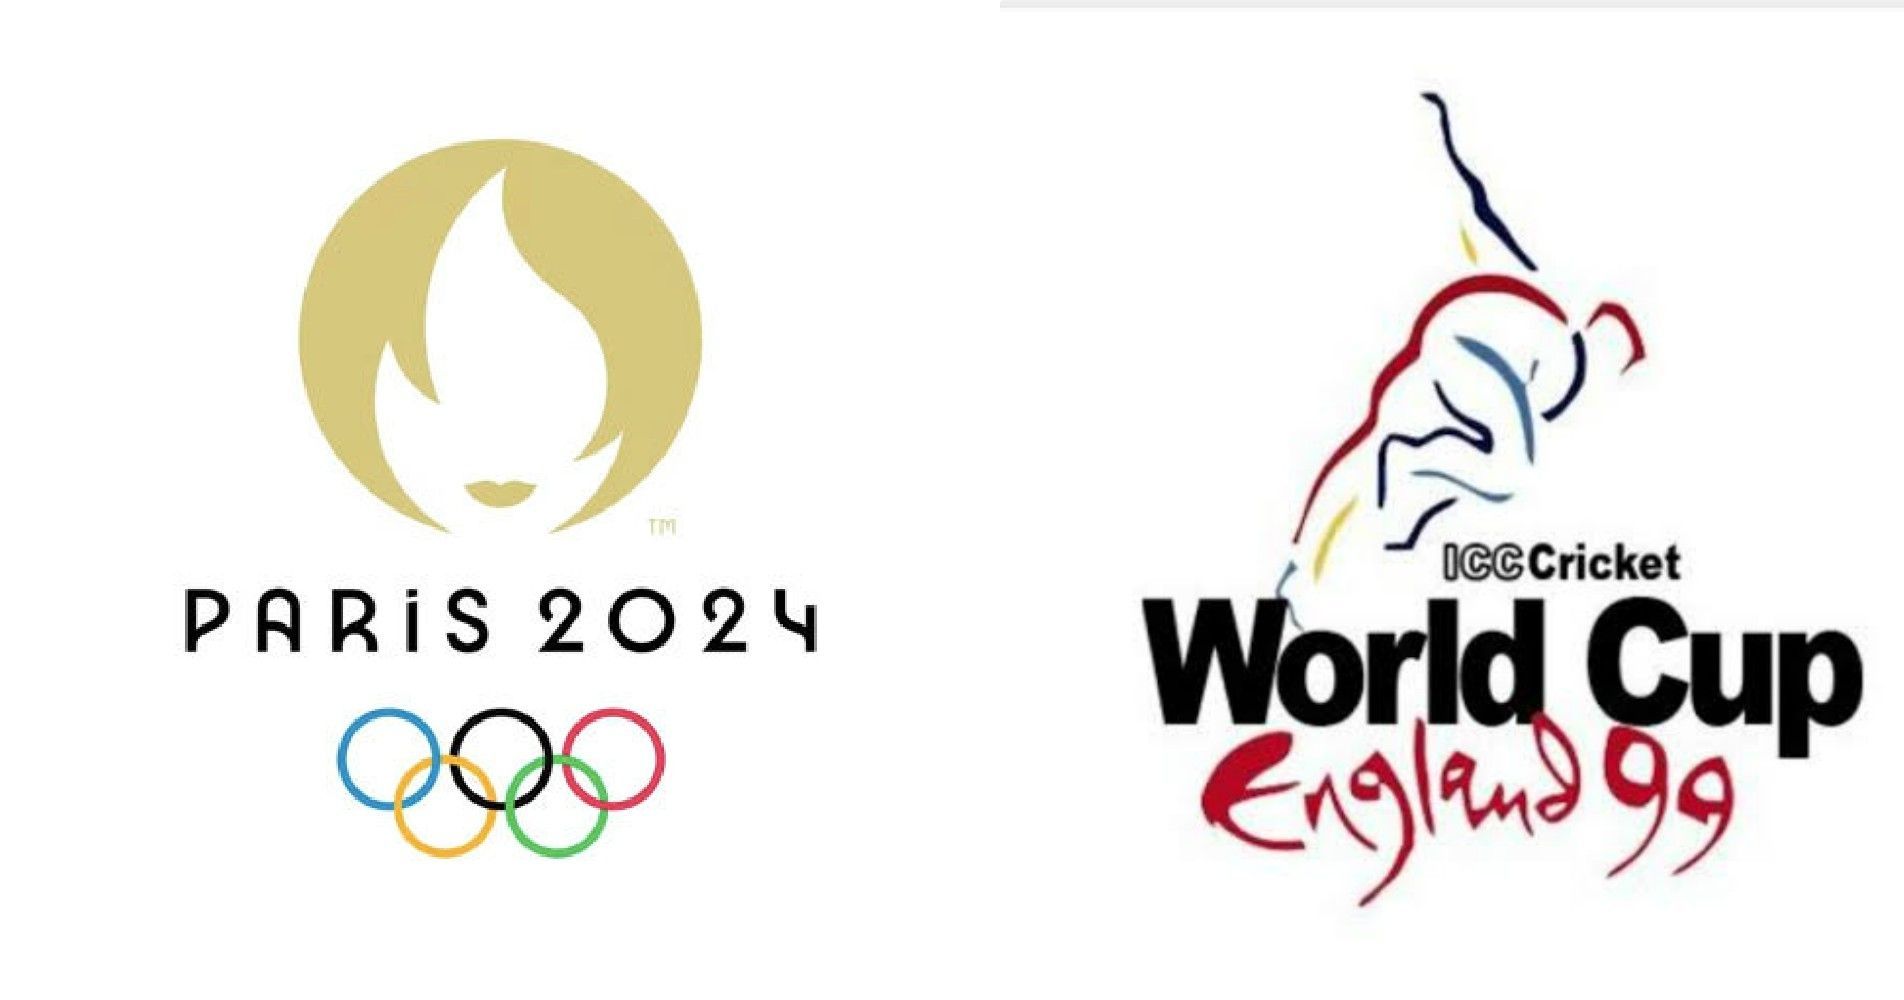 Paris 2024 Olympics, 1999 ICC World Cup + 5 Bizarre Sports Logos That